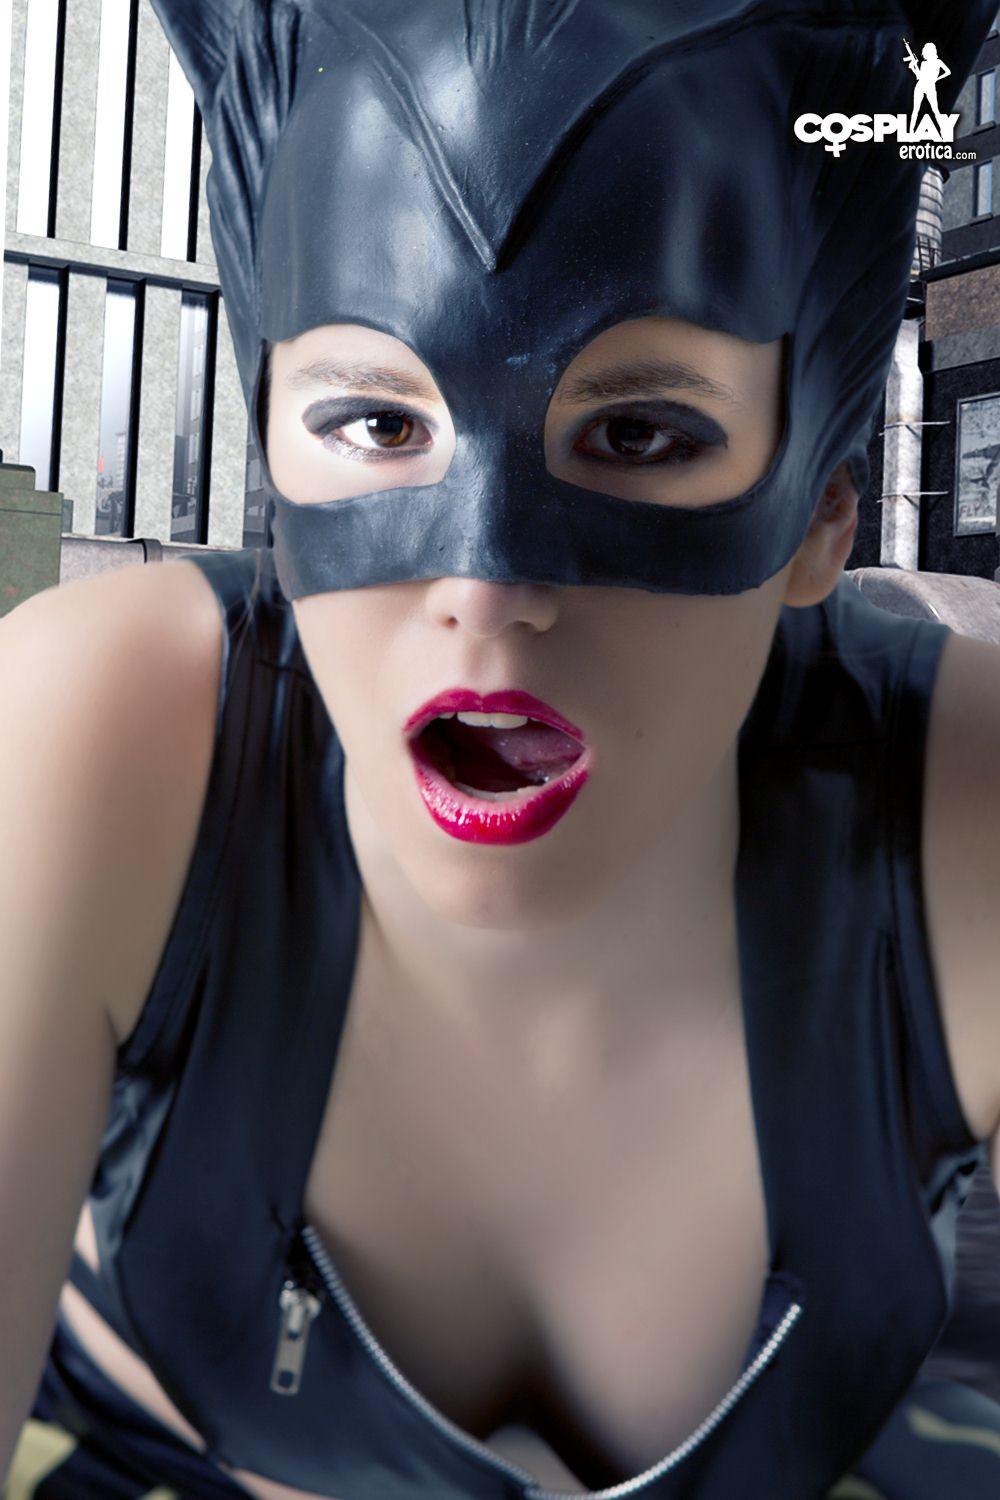 Sexy cosplayer cassie si veste come catwoman
 #53704332